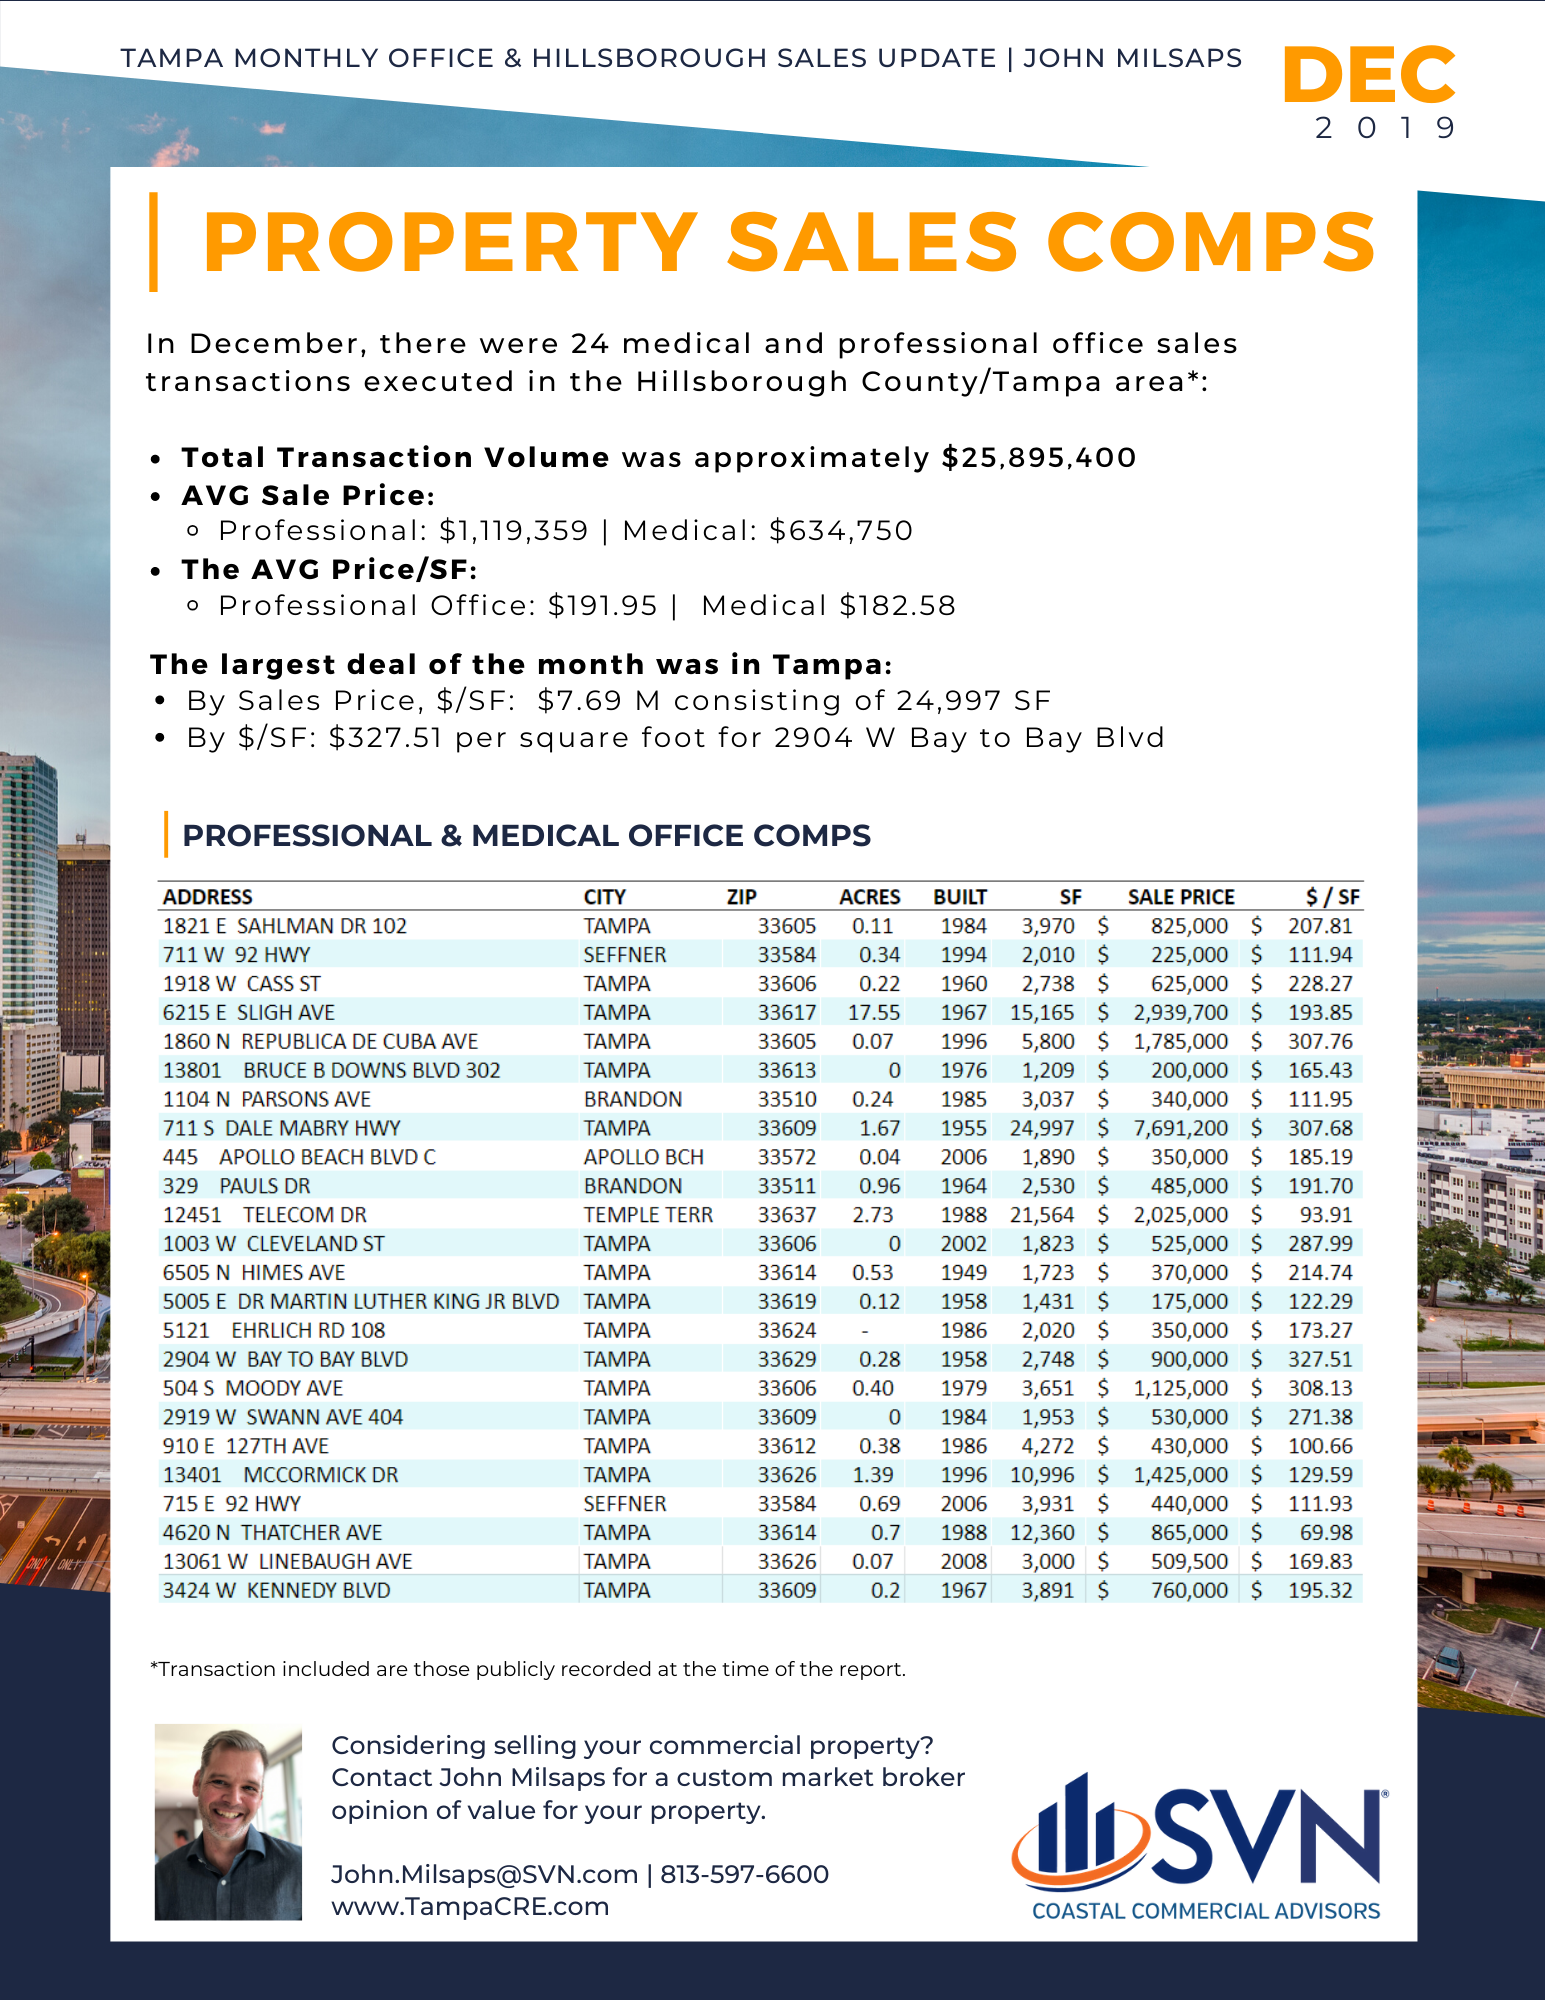 Tampa Monthly Office Sales Report John Milsaps 